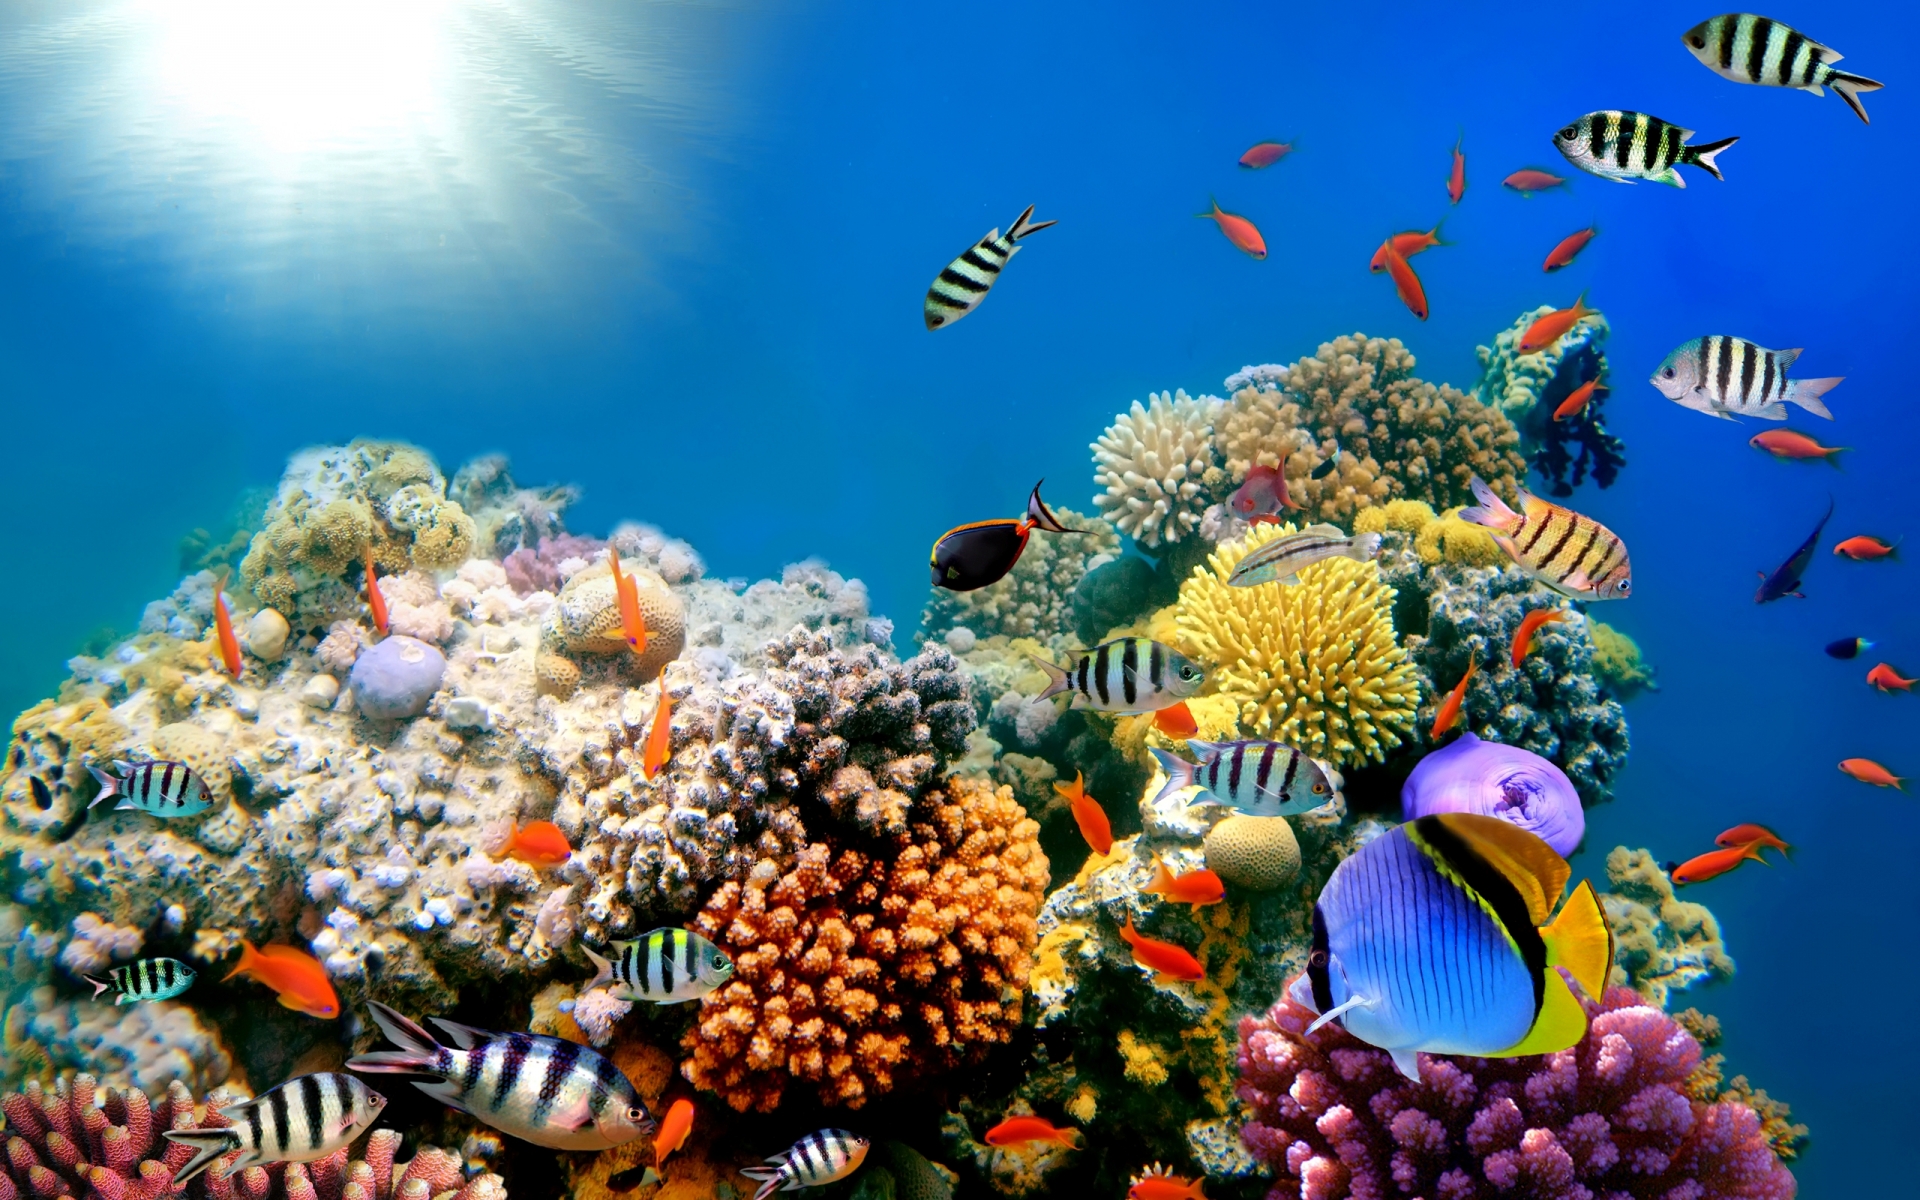  Free Desktop Backgrounds chillcovercom Underwater Ocean Coral Free